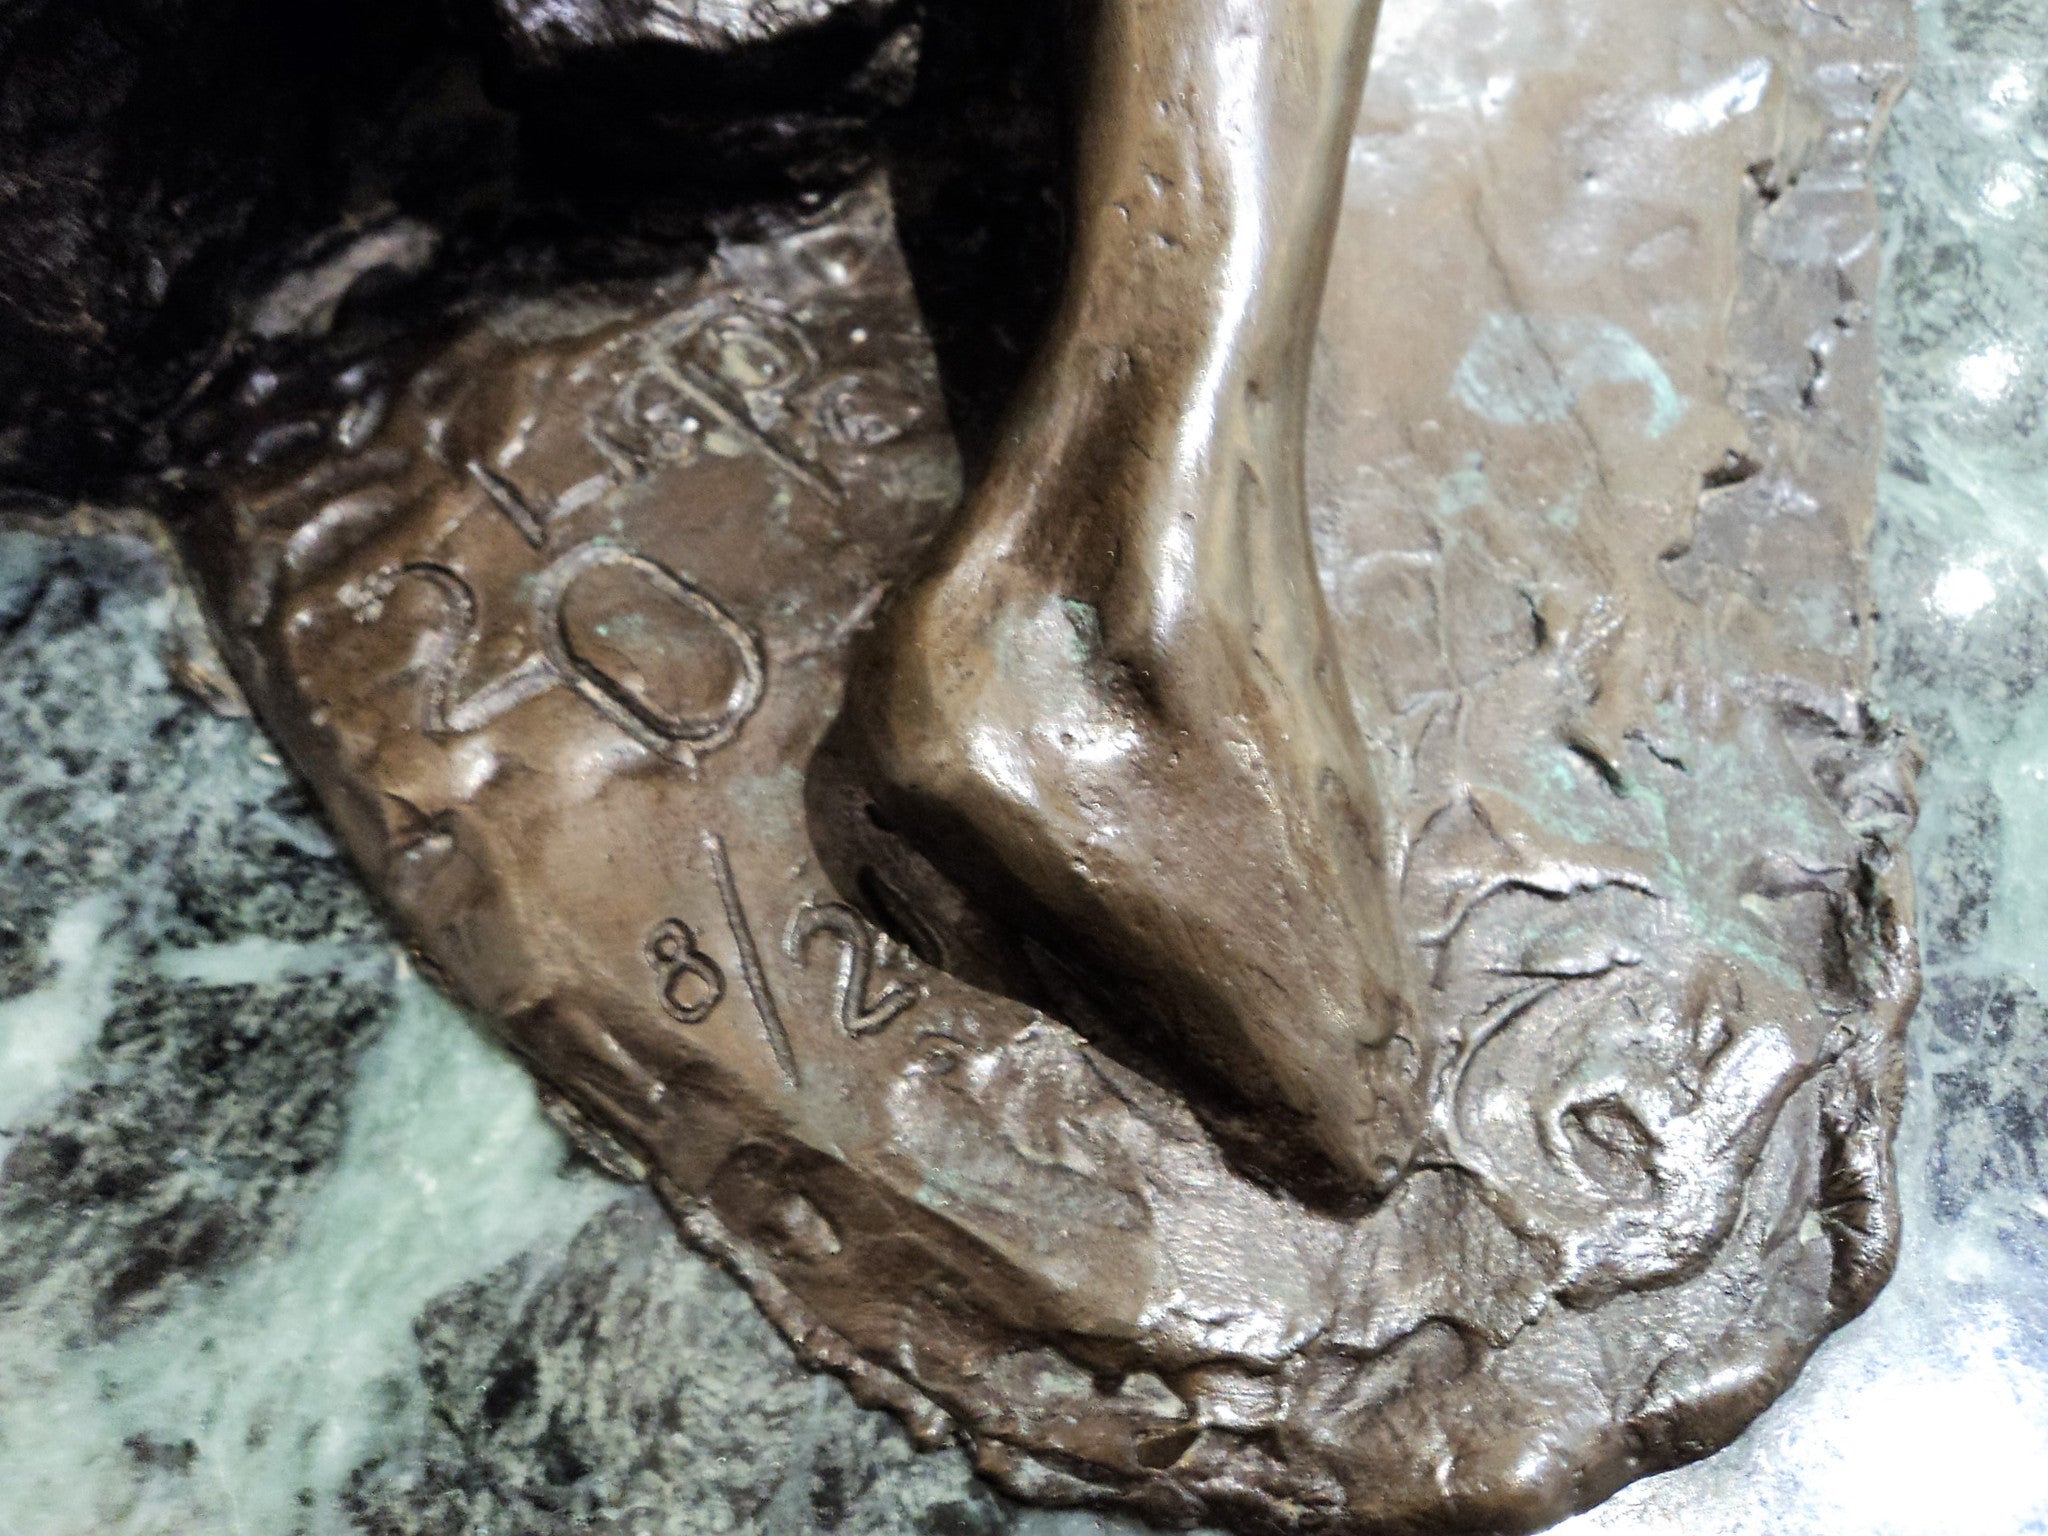 Bathing Nudes Female  Bronze Sculpture